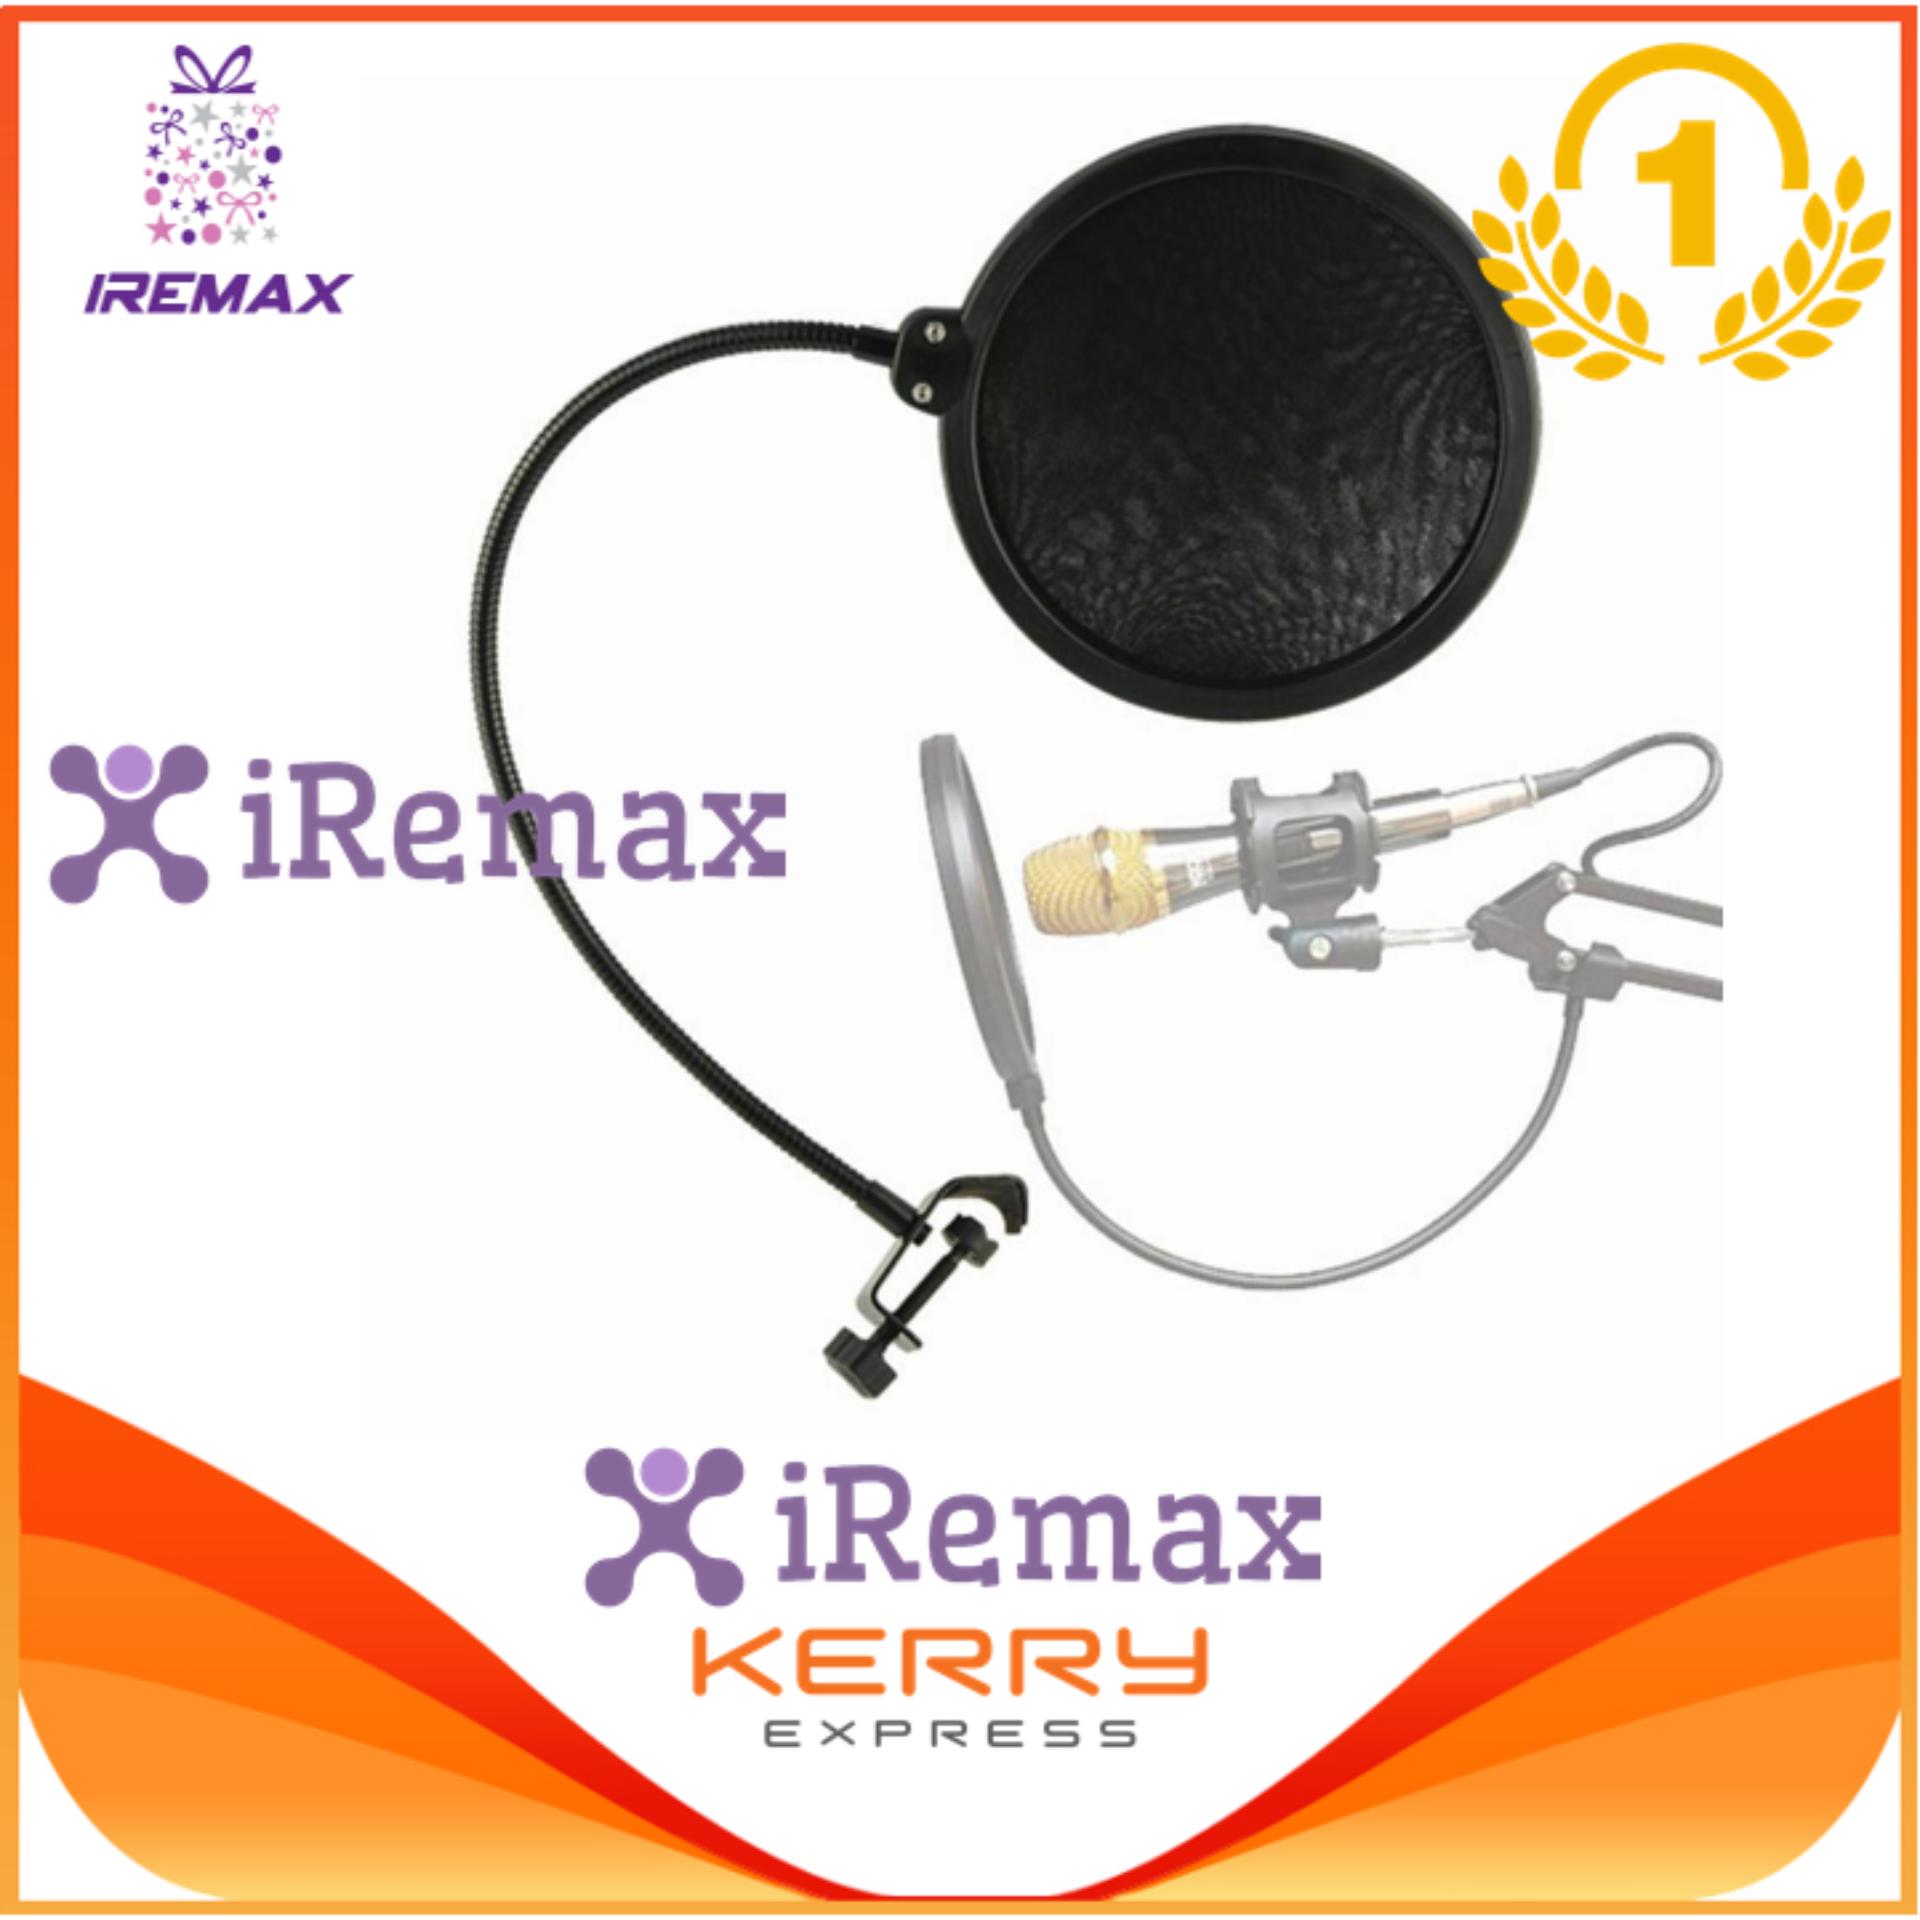 iremax สตูดิโอไมโครโฟน Studio Microphones Mic Pop Filter Mask Shield Protection - Black